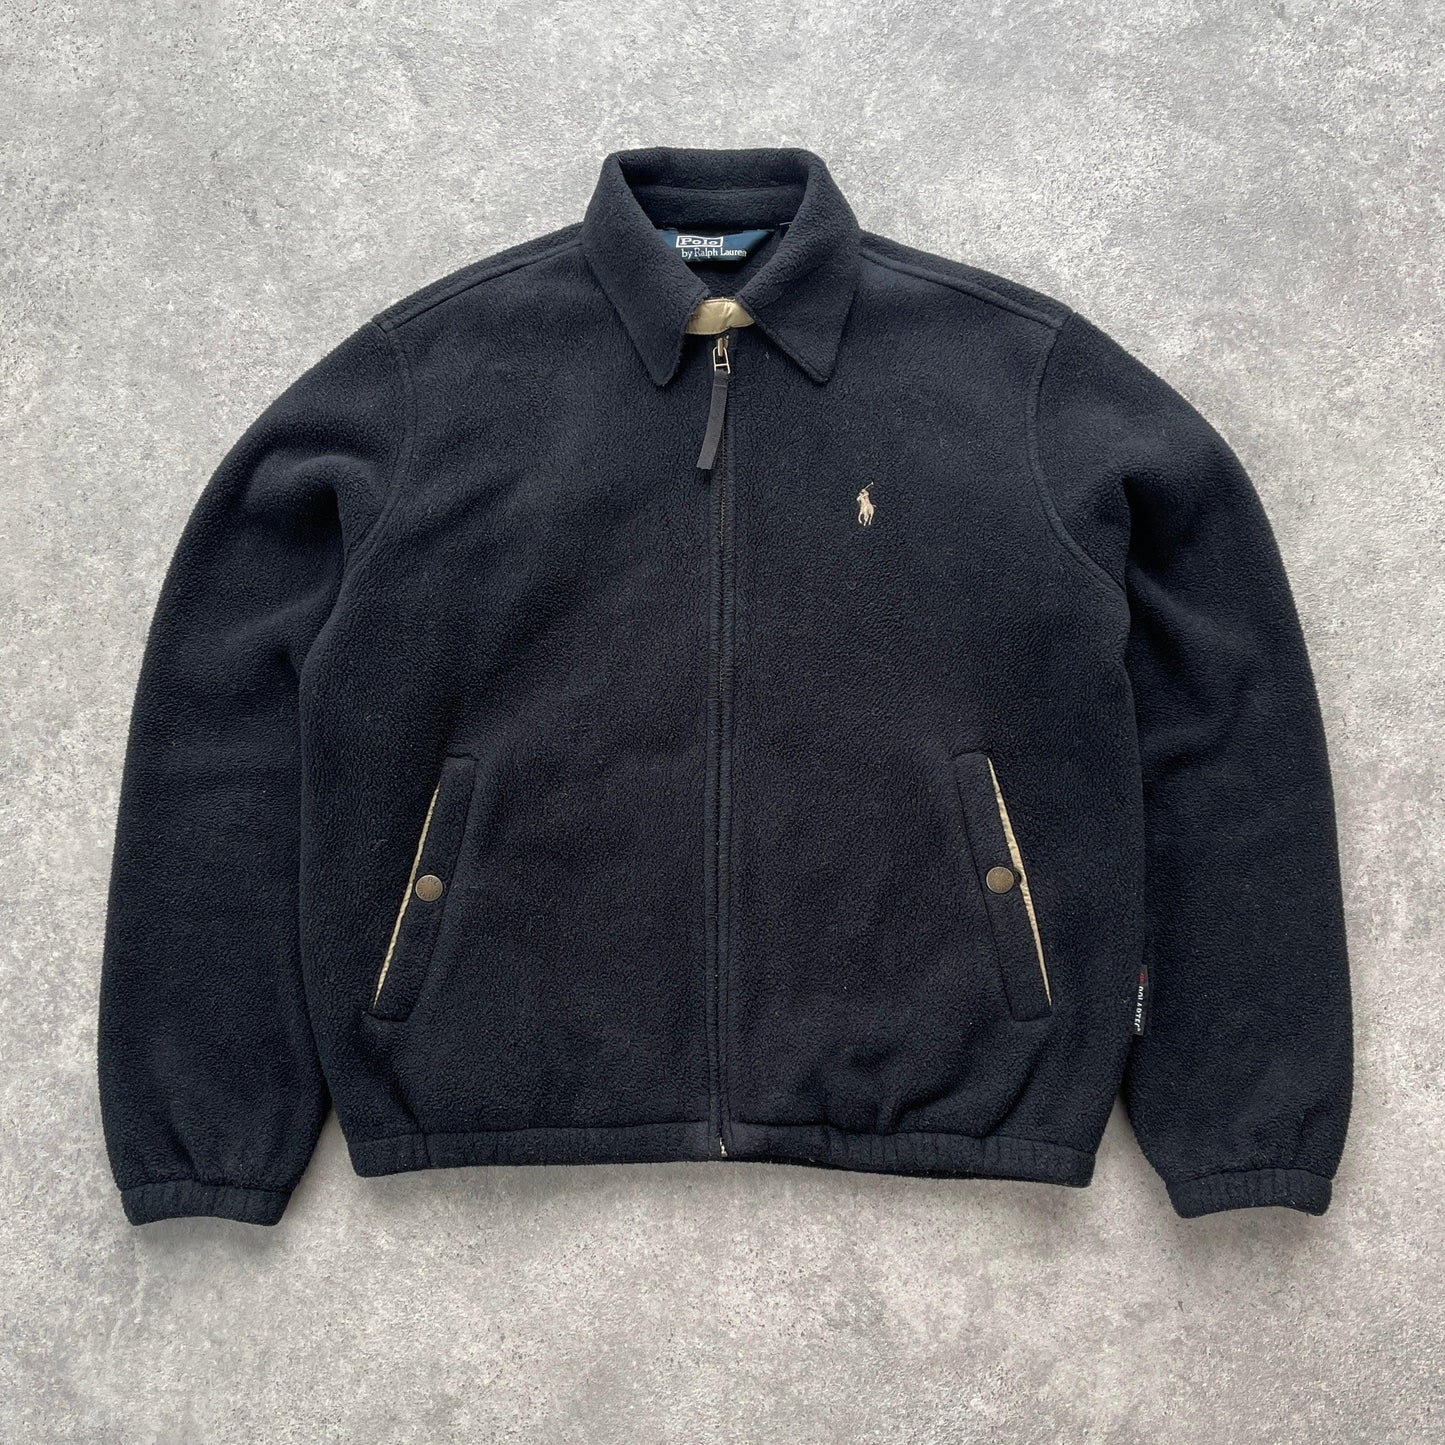 Ralph Lauren 1990s Polartec heavyweight fleece harrington jacket (L) - Known Source